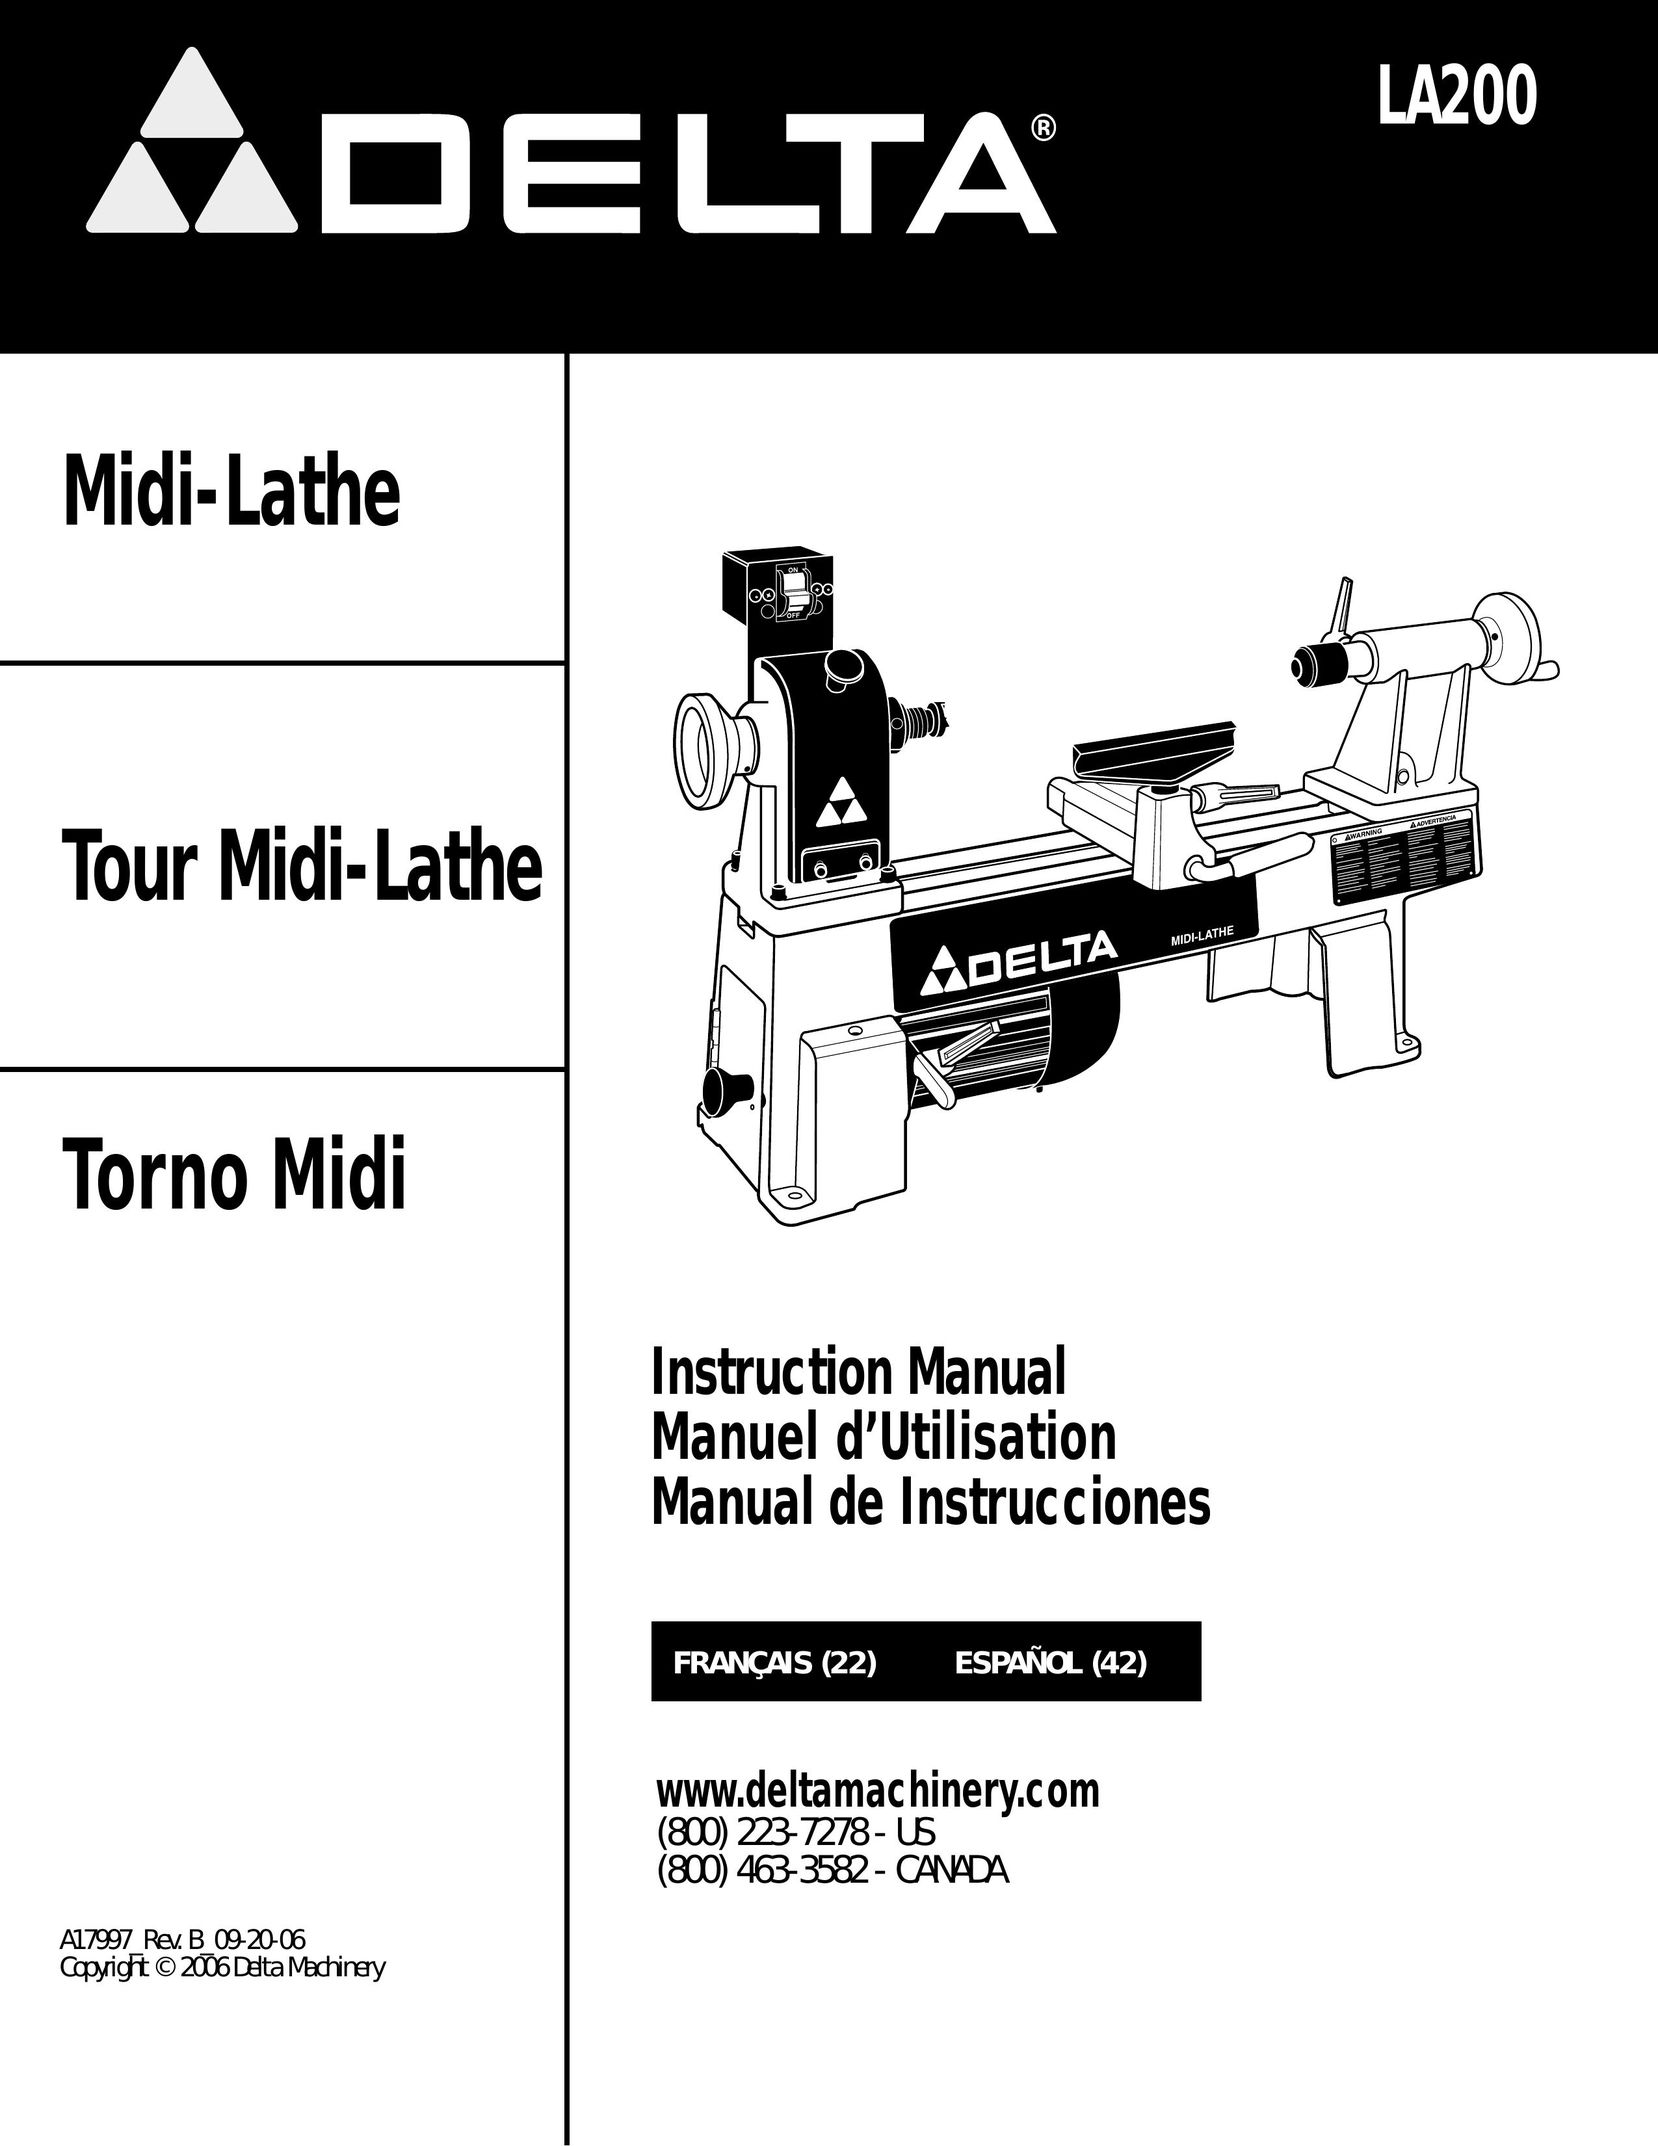 DeWalt LA200 Lathe User Manual